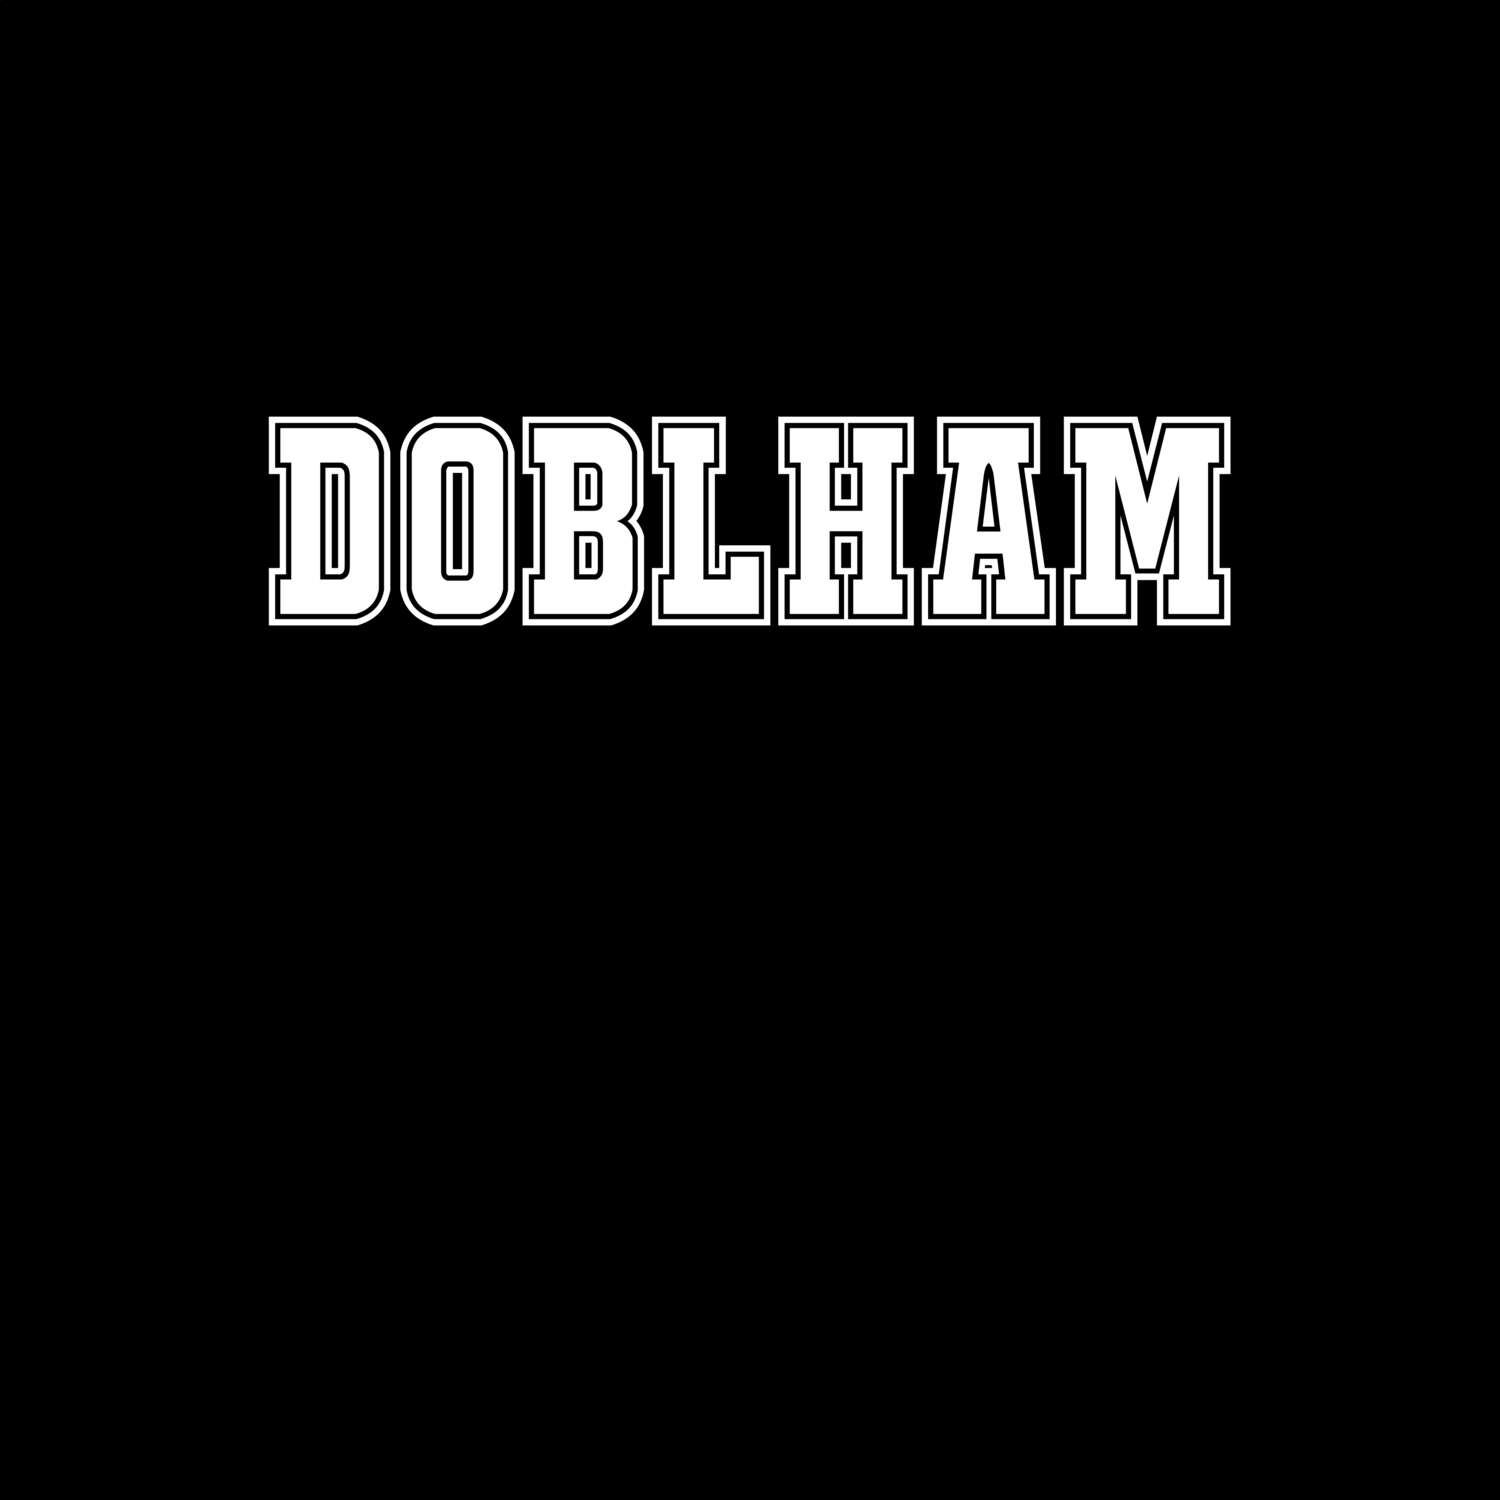 Doblham T-Shirt »Classic«